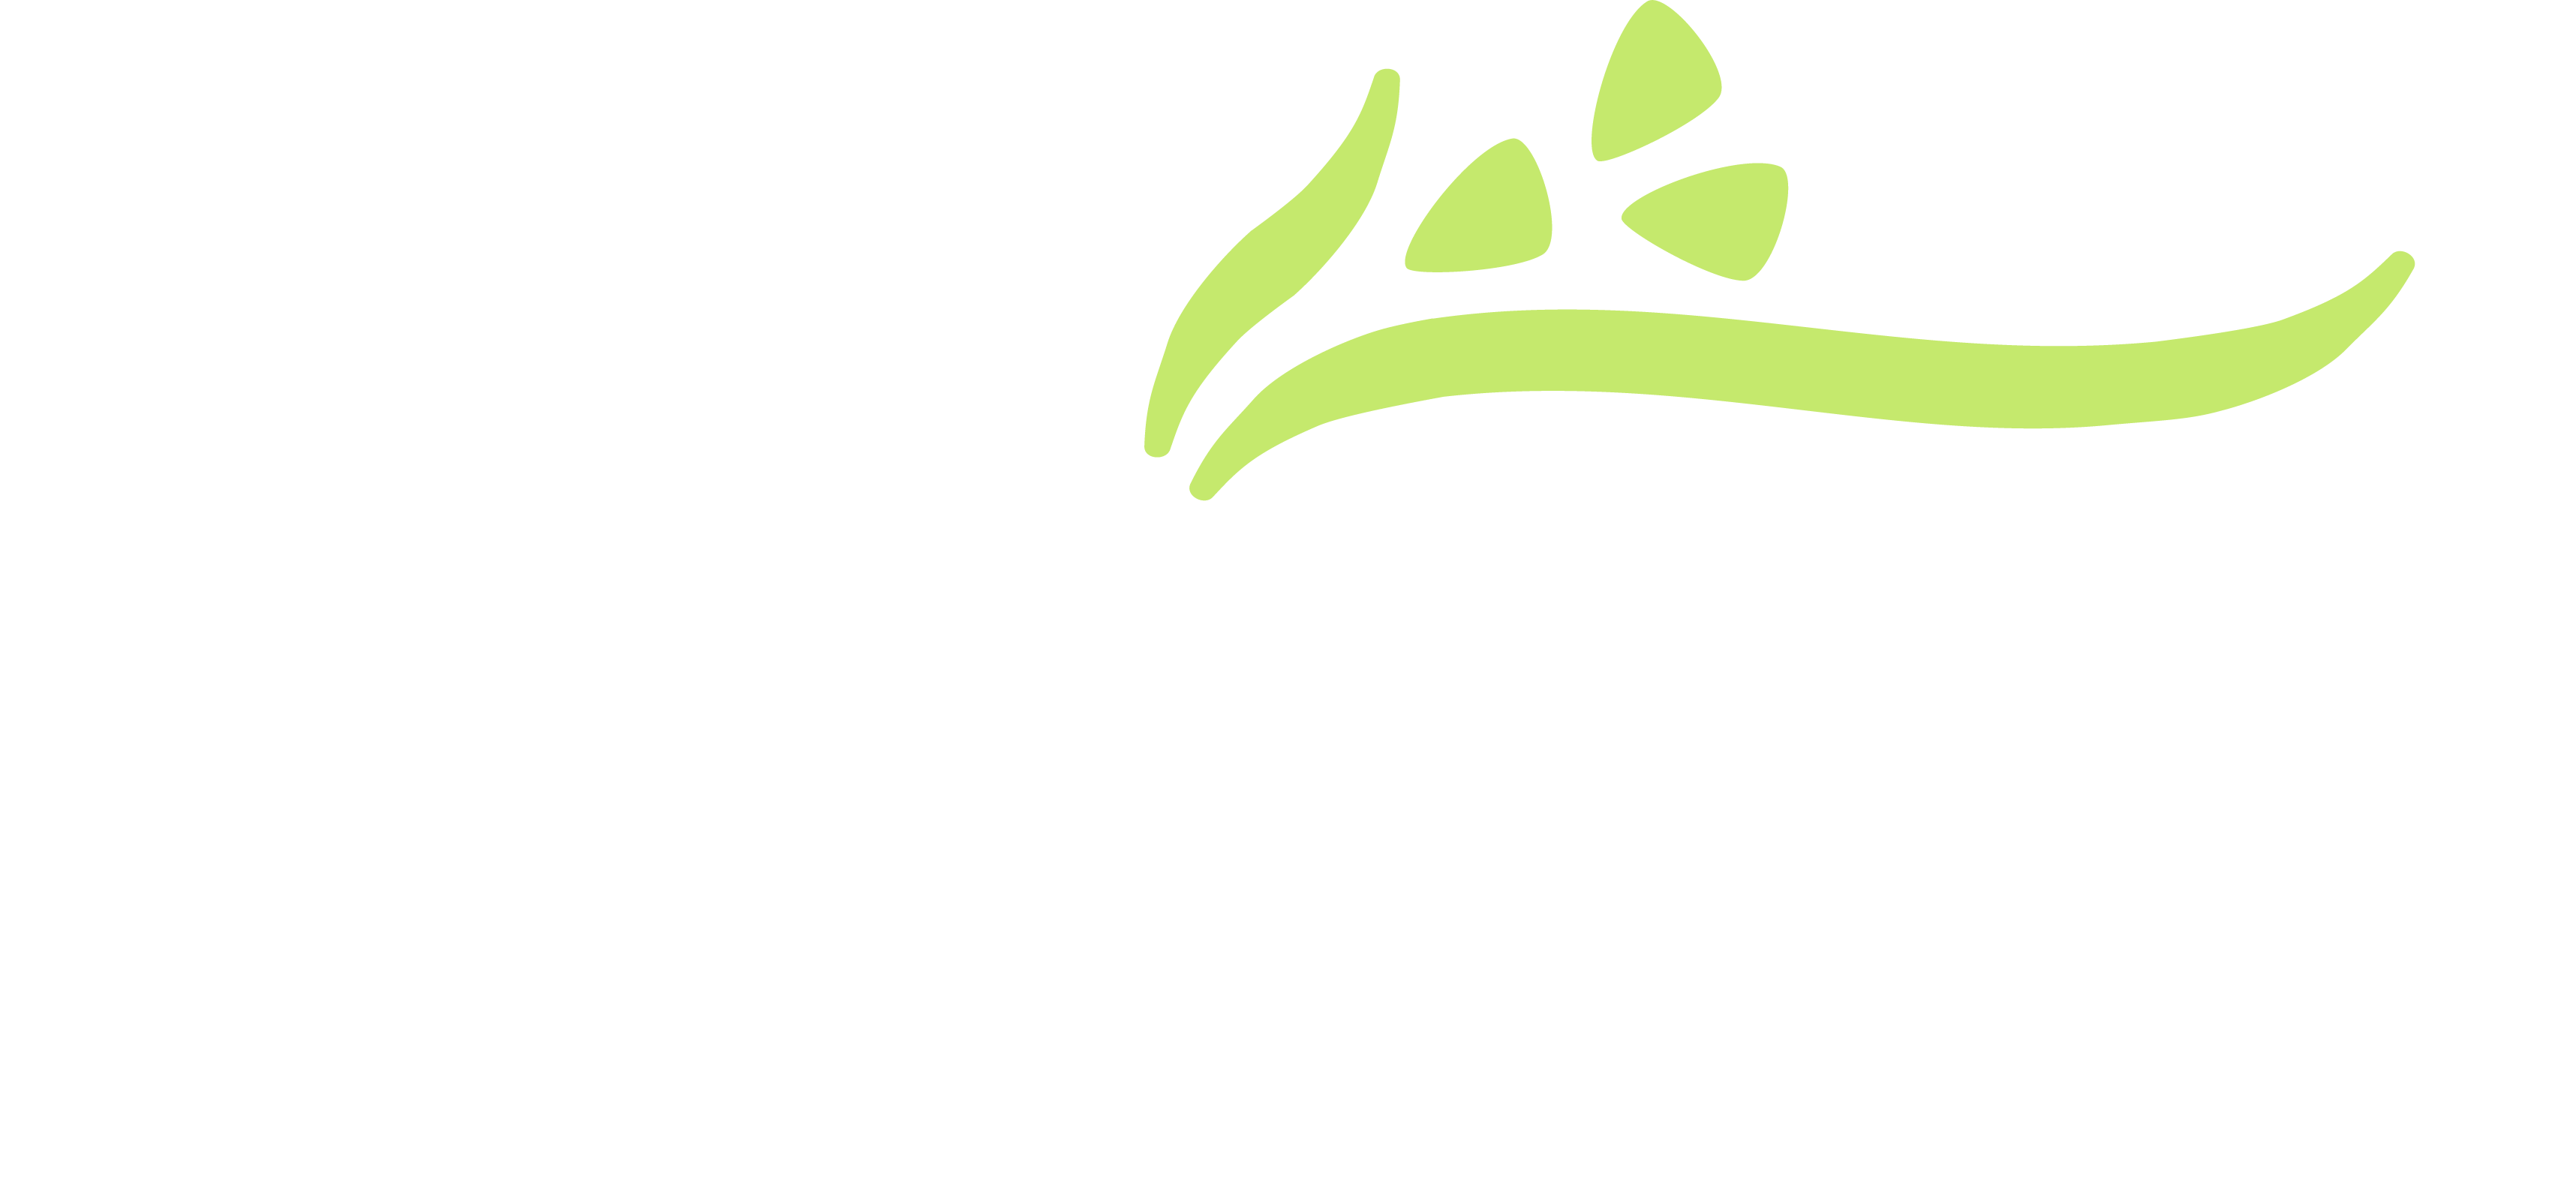 Nuflours Logo - 'Creating Food For Good'